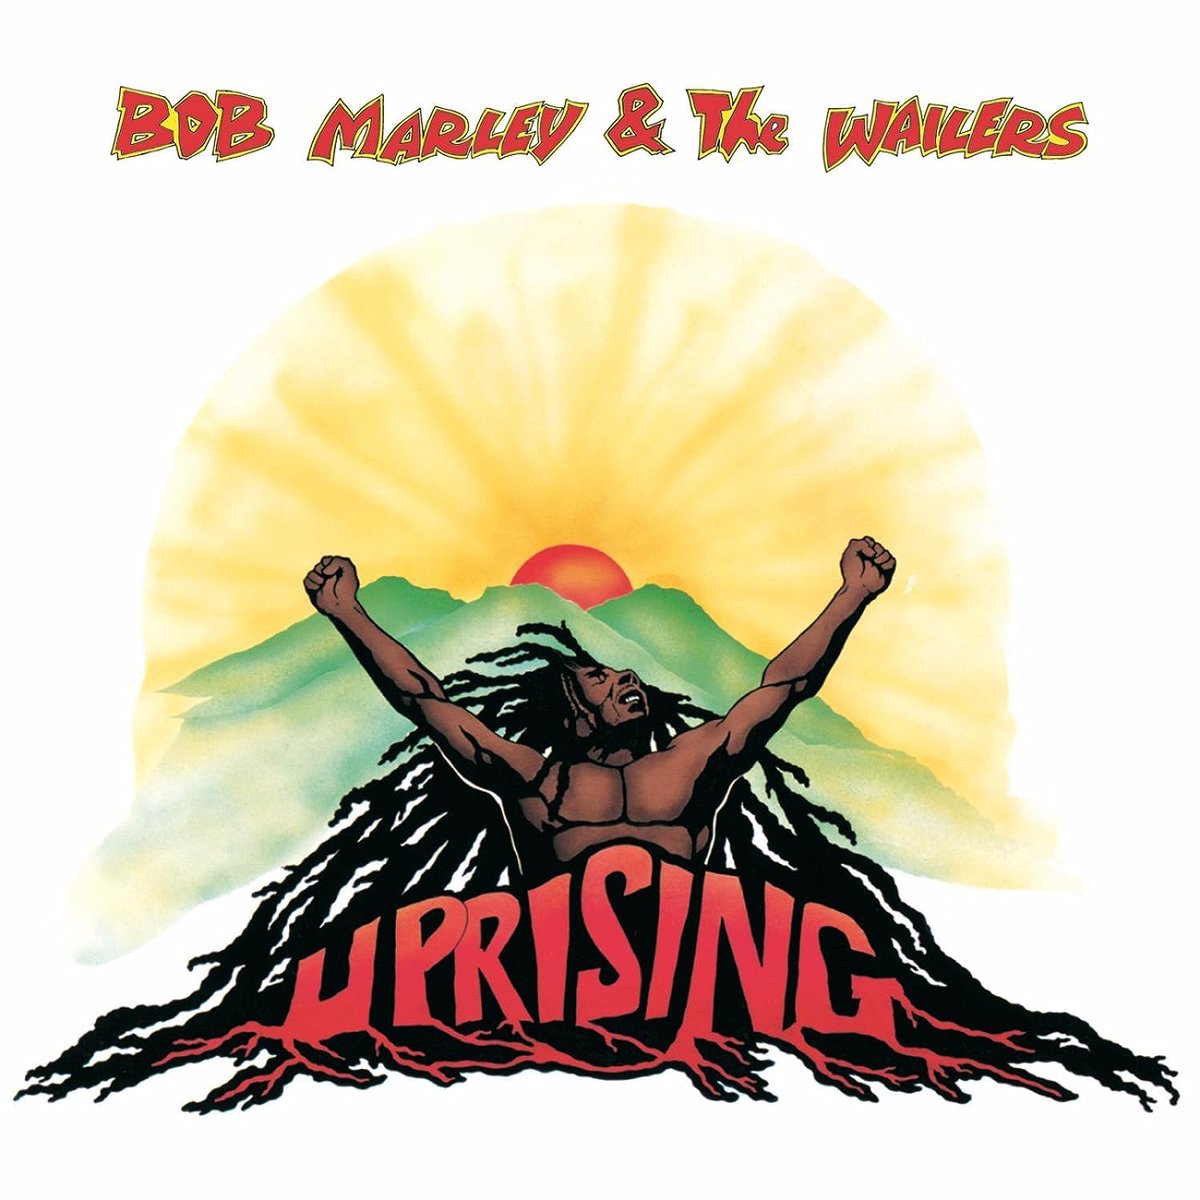 Six Bob Marley vinyl on sale:

Catch a Fire, $17.49 ($7.49 coupon) - amzn.to/4dYZ09K

Survival, $17.49 ($7.49 coupon) - amzn.to/4aFxxXs

Rastaman Vibration, $17.49 ($7.49 coupon) - amzn.to/3R1BLSz

Uprising, $19.59 ($8.39 coupon) - amzn.to/4aBqBe7